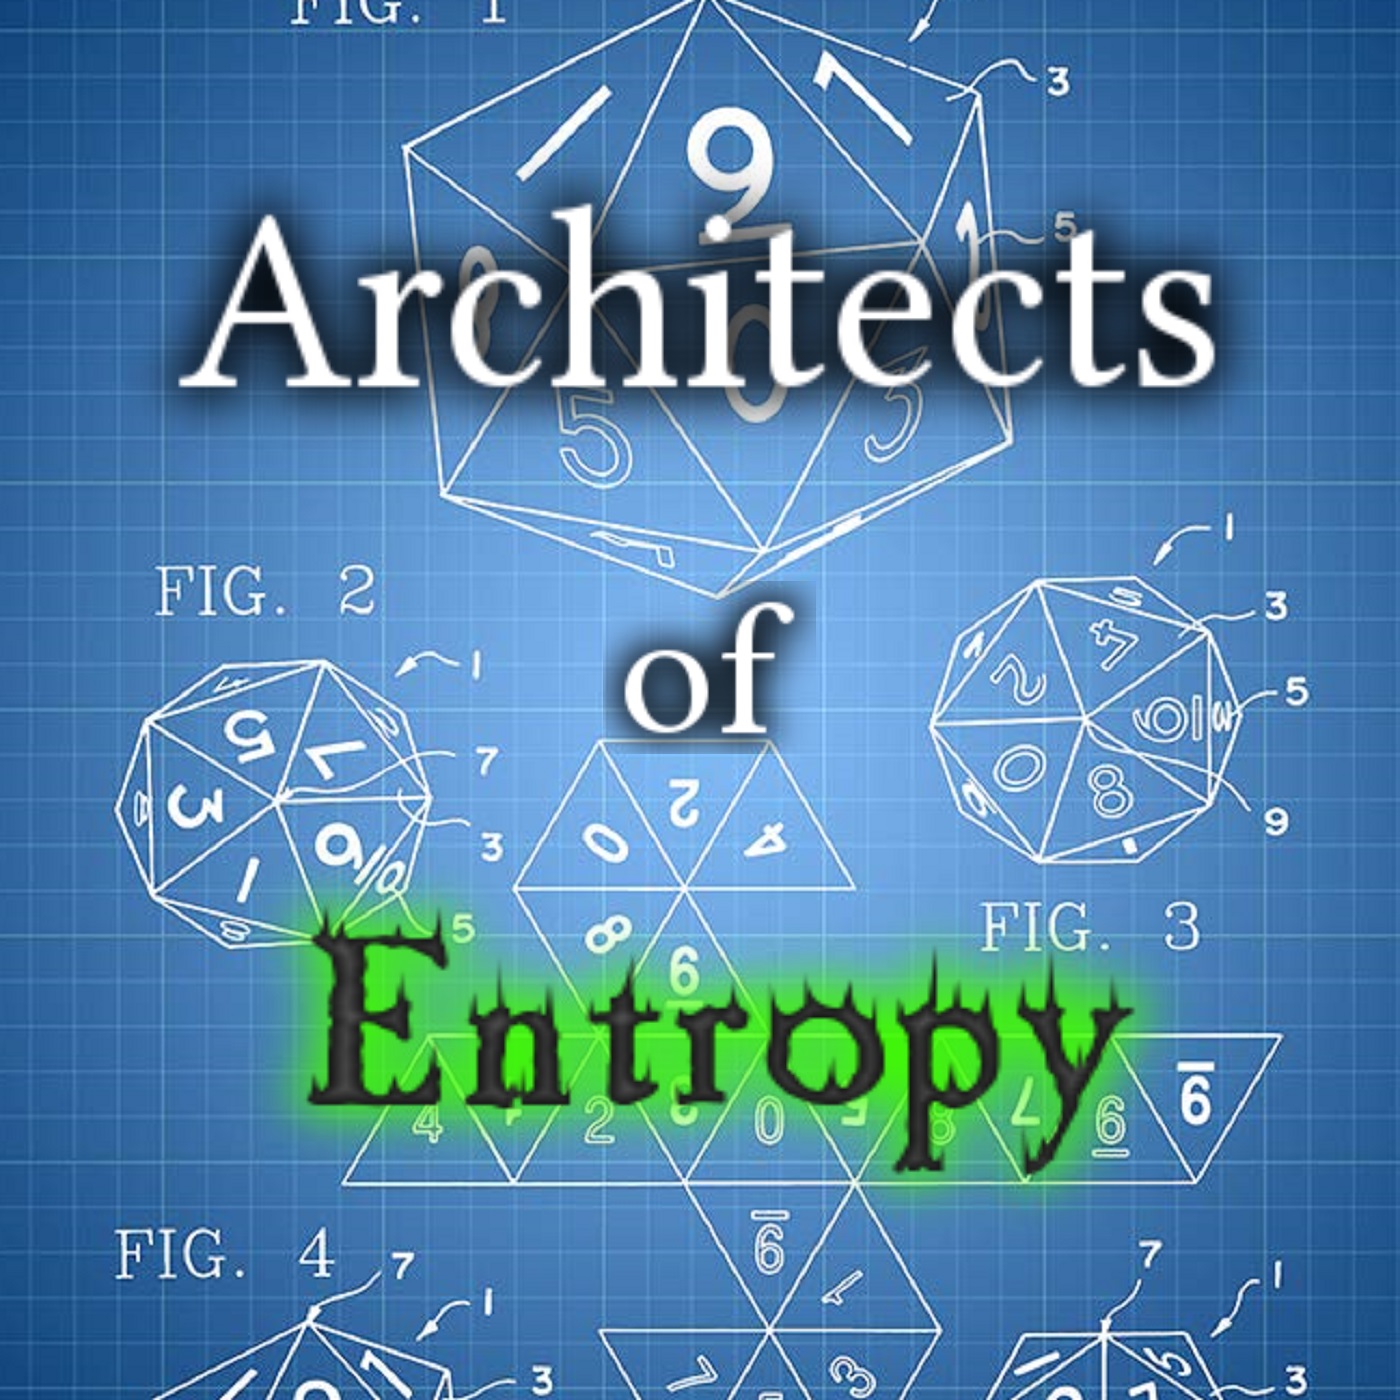 Architects of Entropy